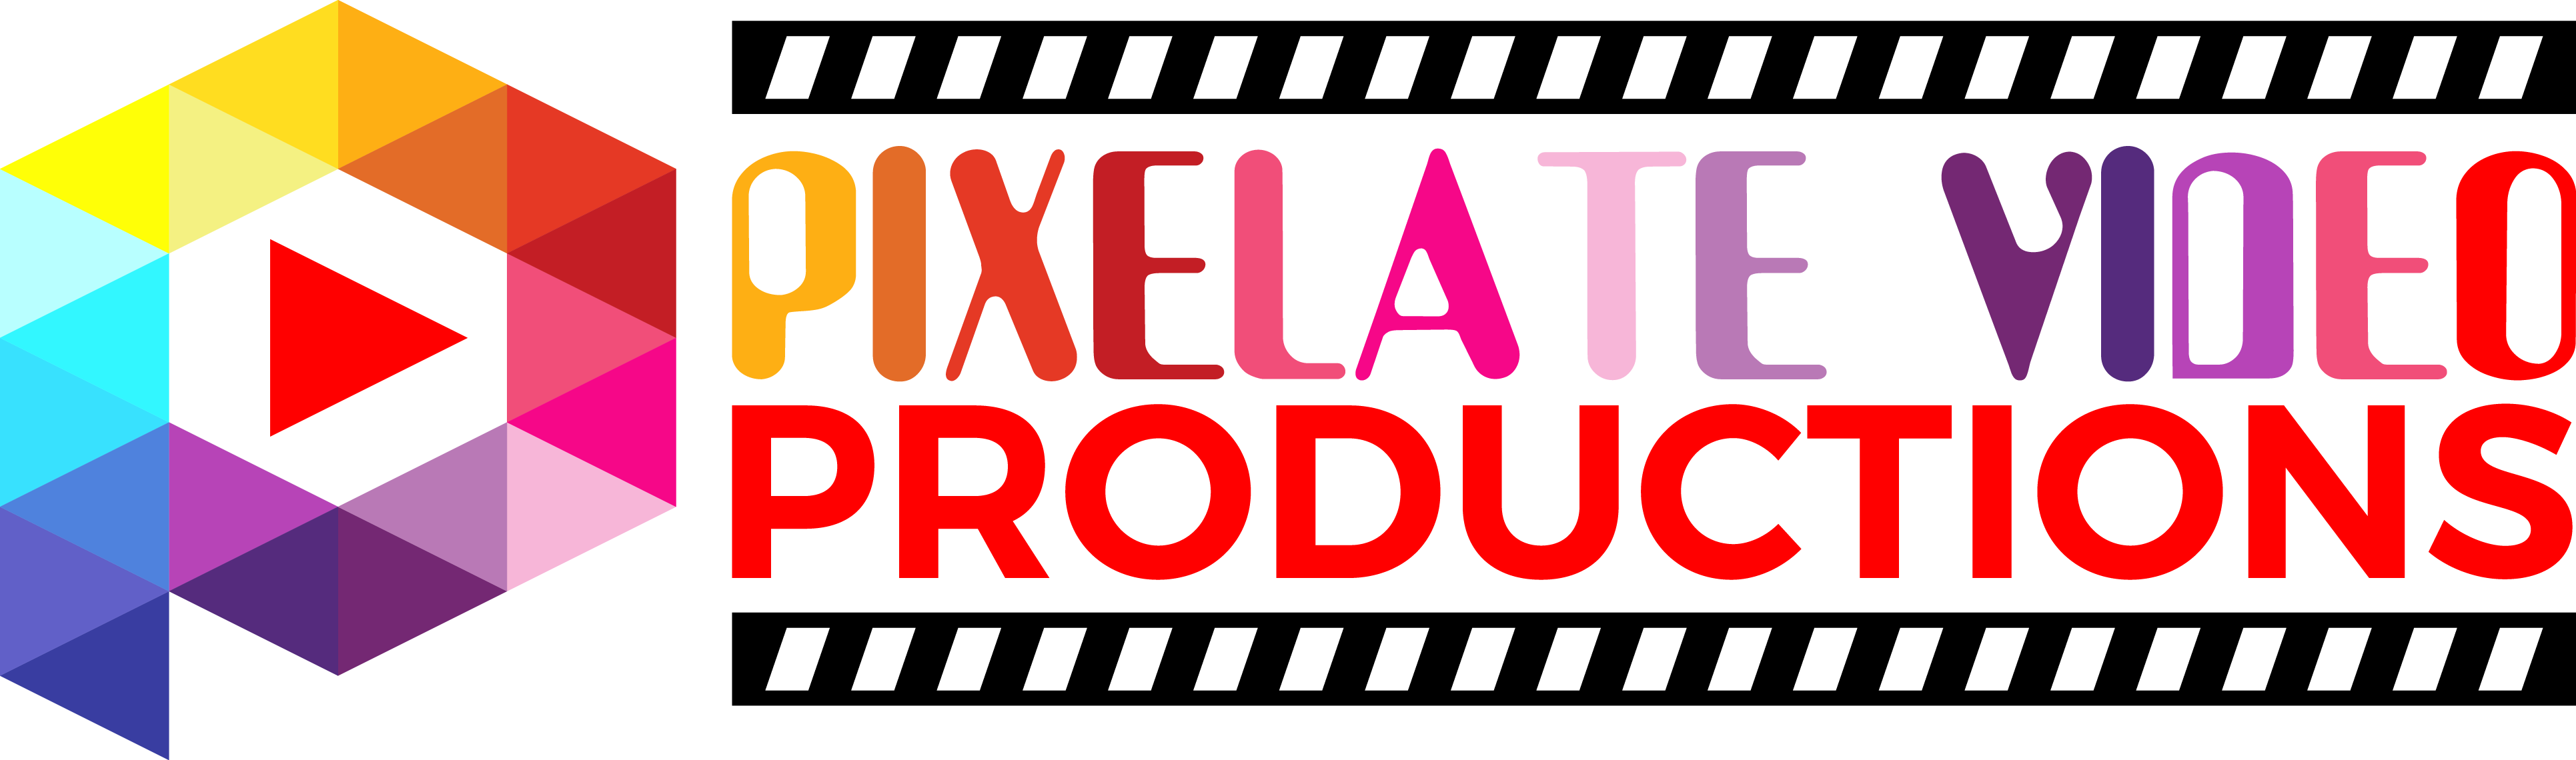 Pixelate Video Productions